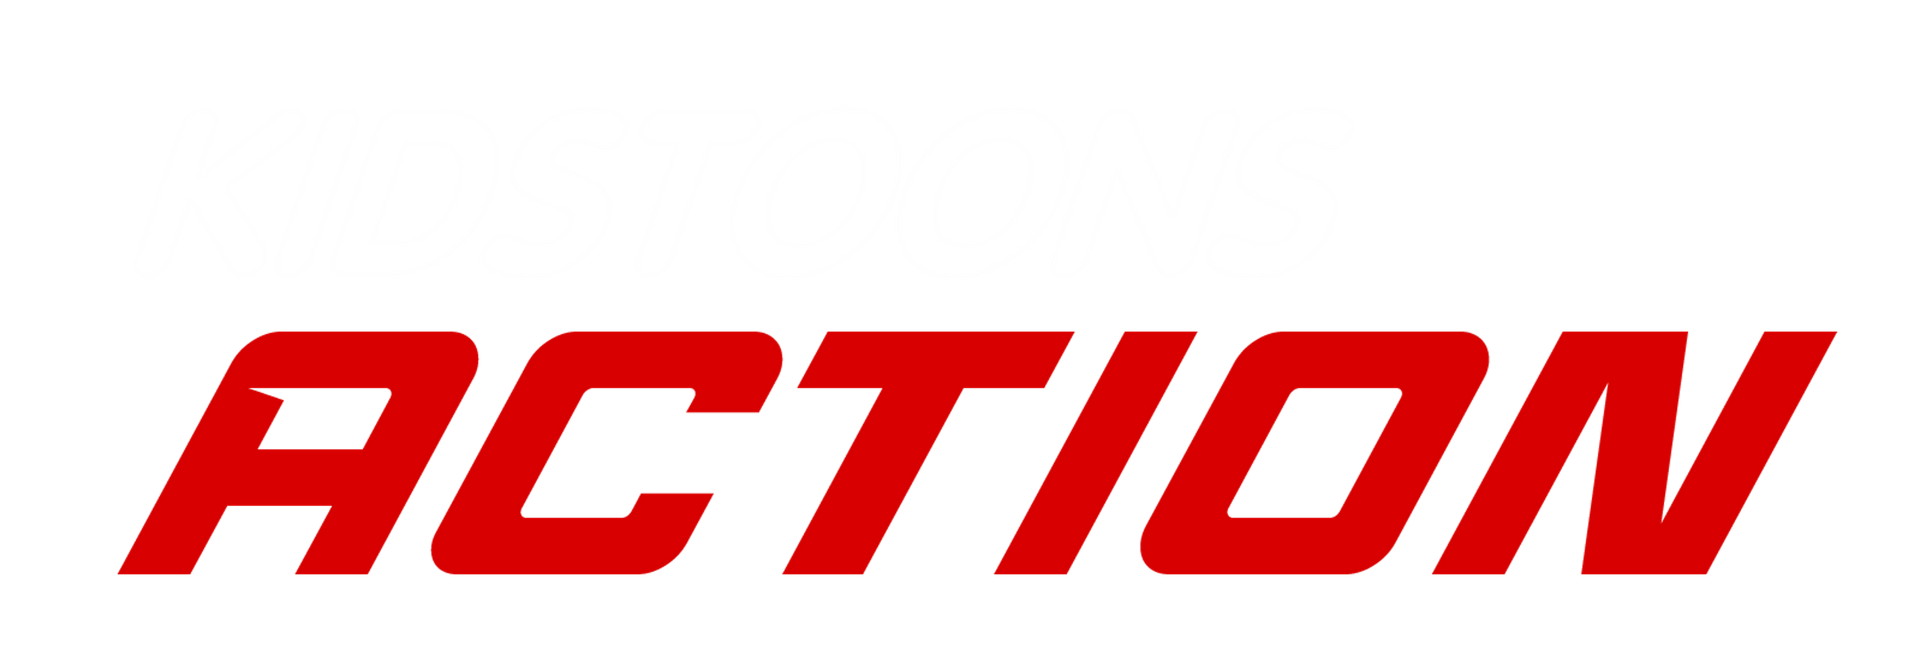 Kidstoons Action Logo by Jaidenscoolartworks on DeviantArt